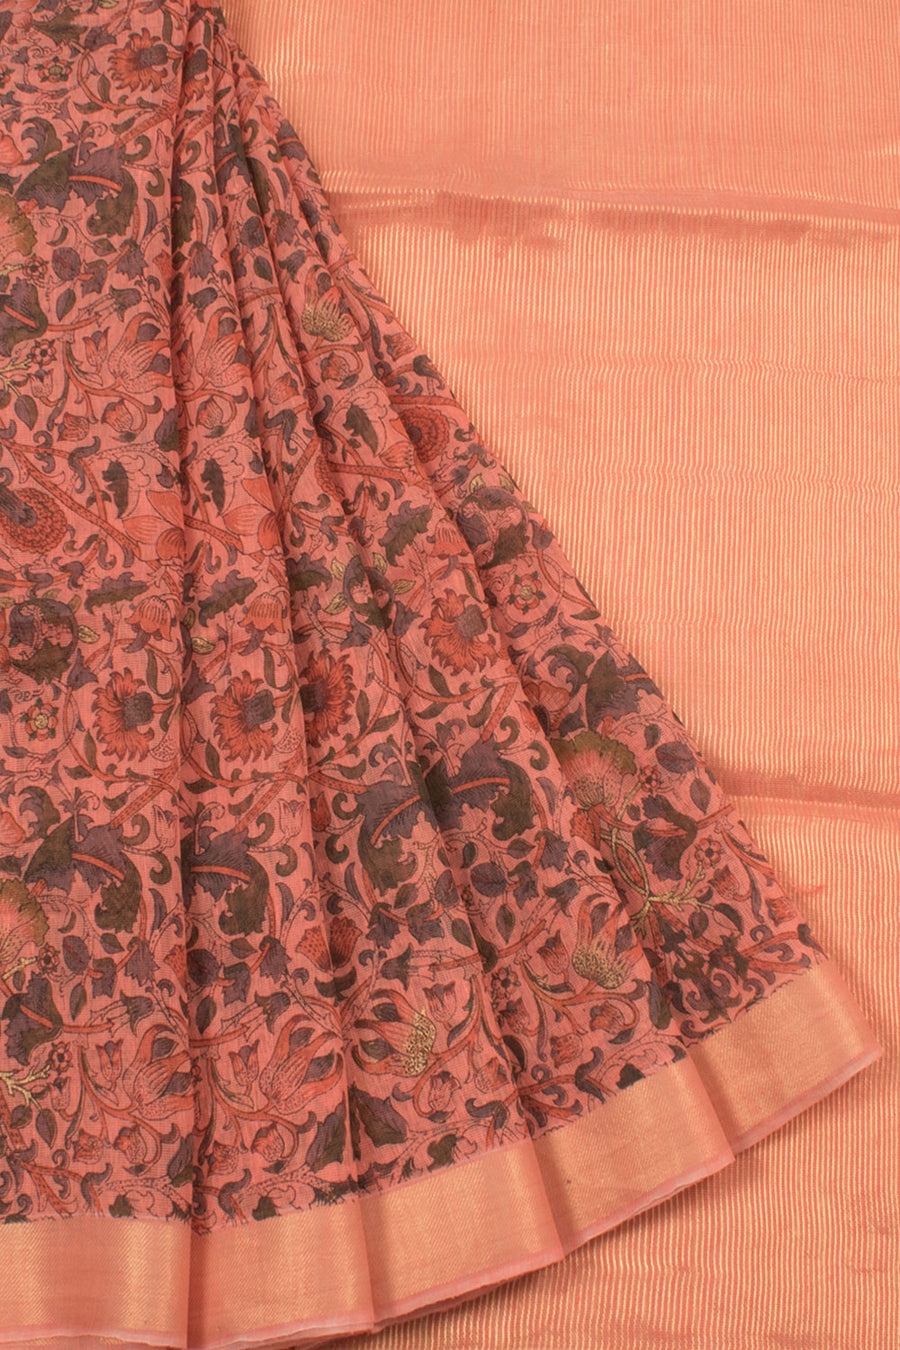 Printed Maheshwari Silk Cotton Saree with Floral Motifs and Zari Border 